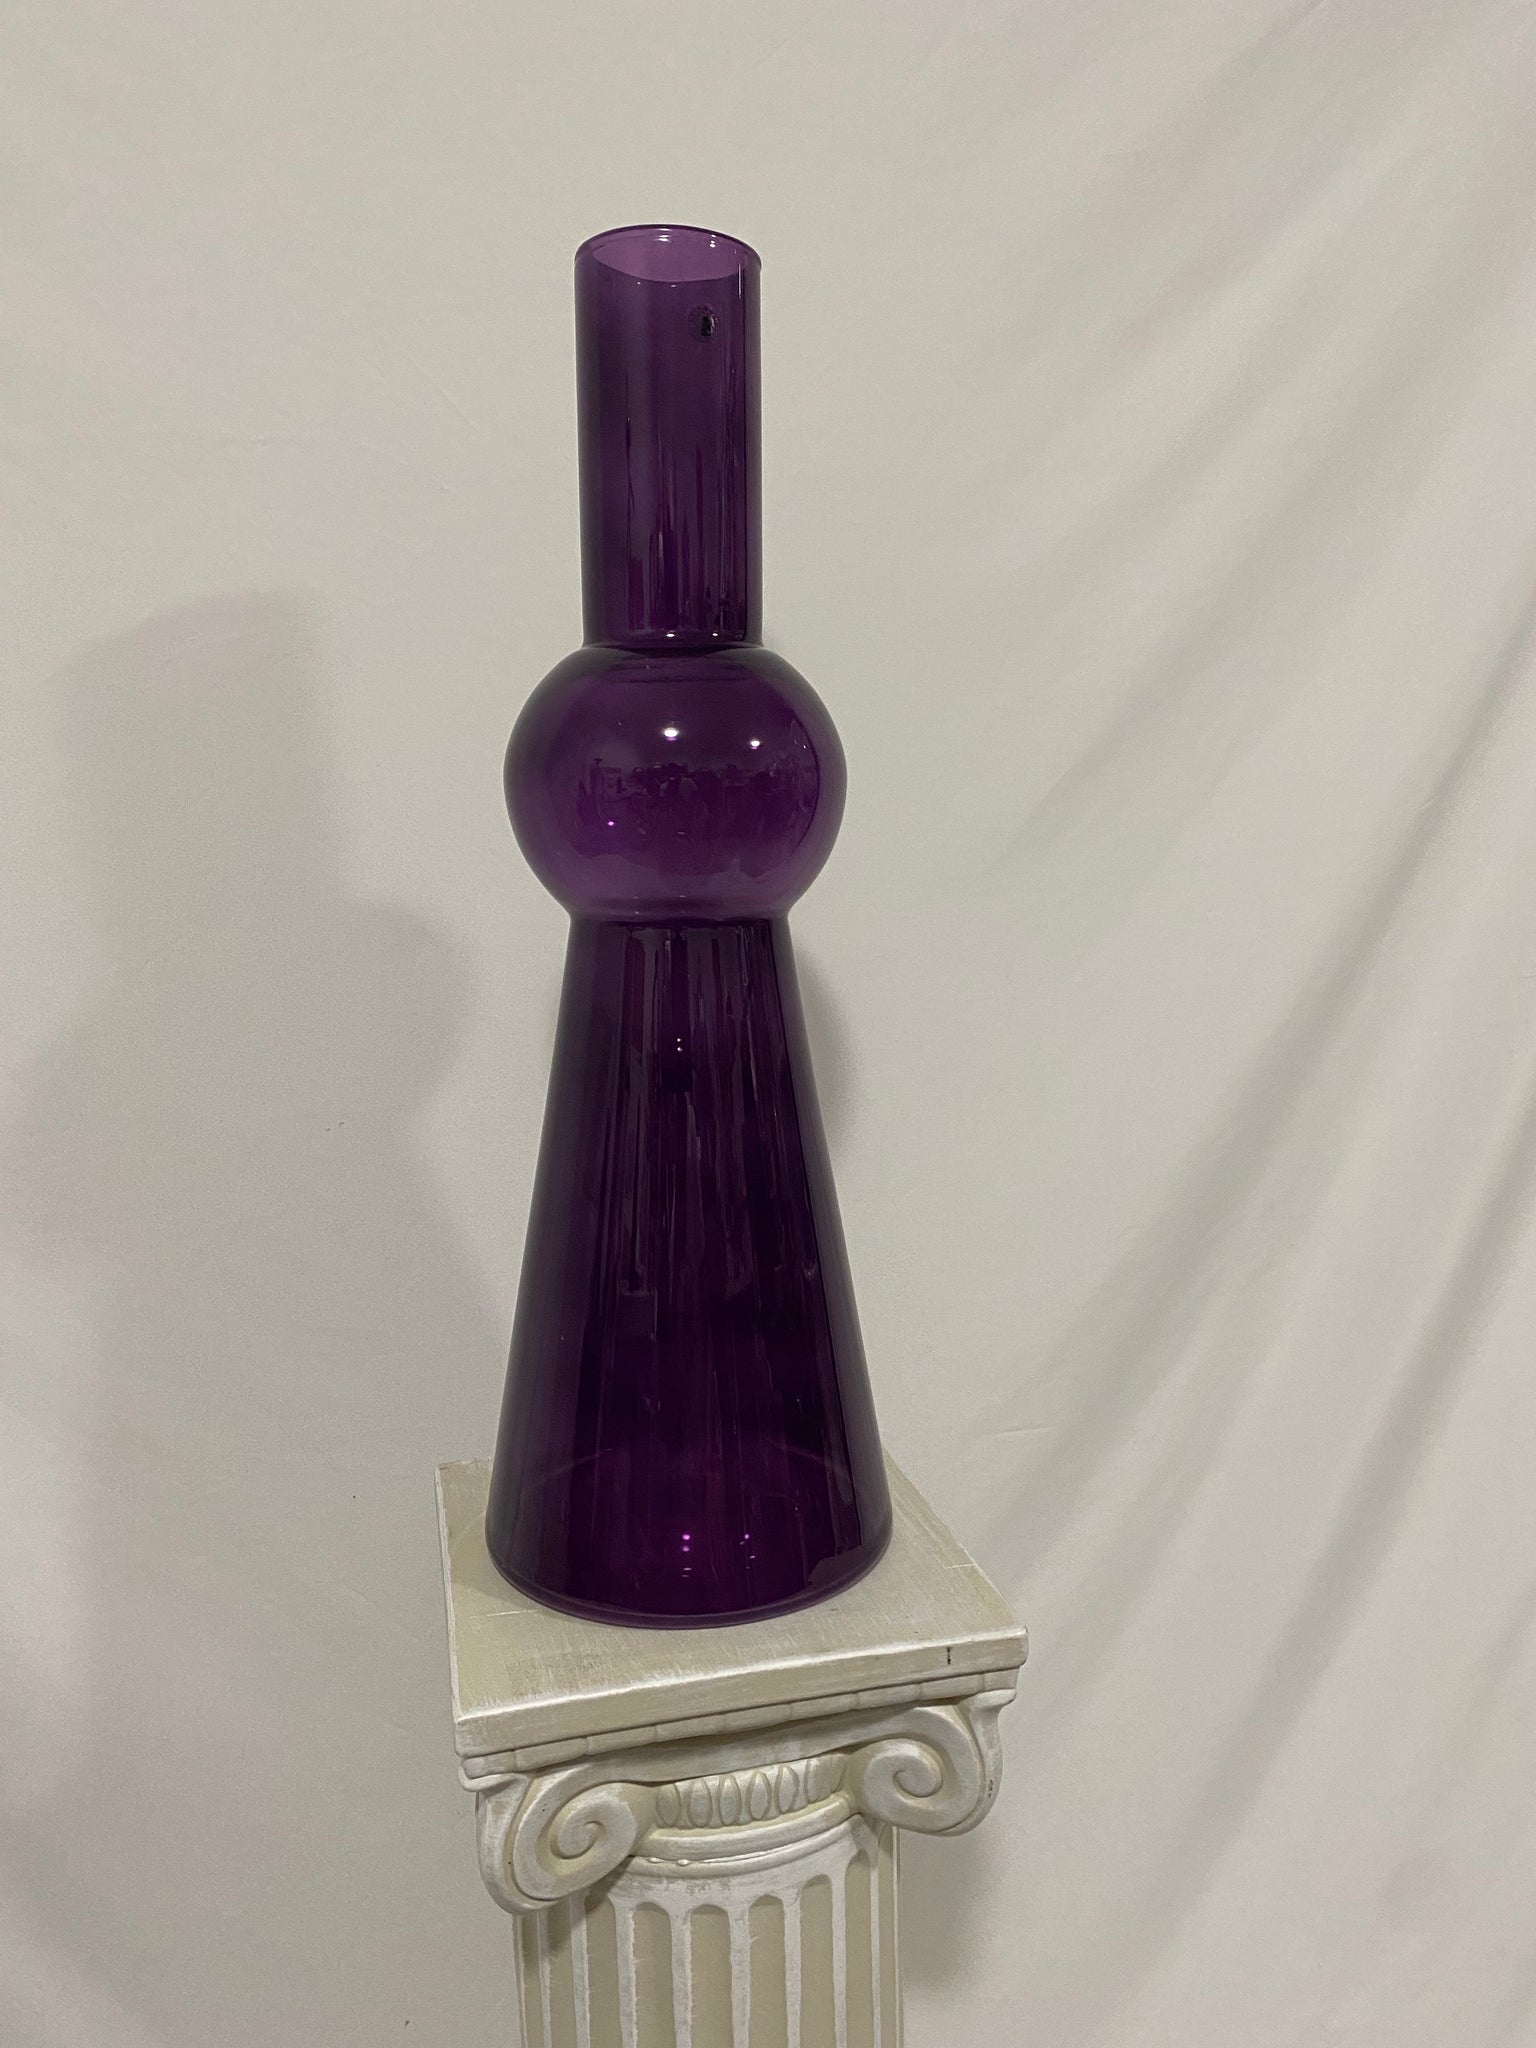 Immense discontinued IKEA purple glass vase